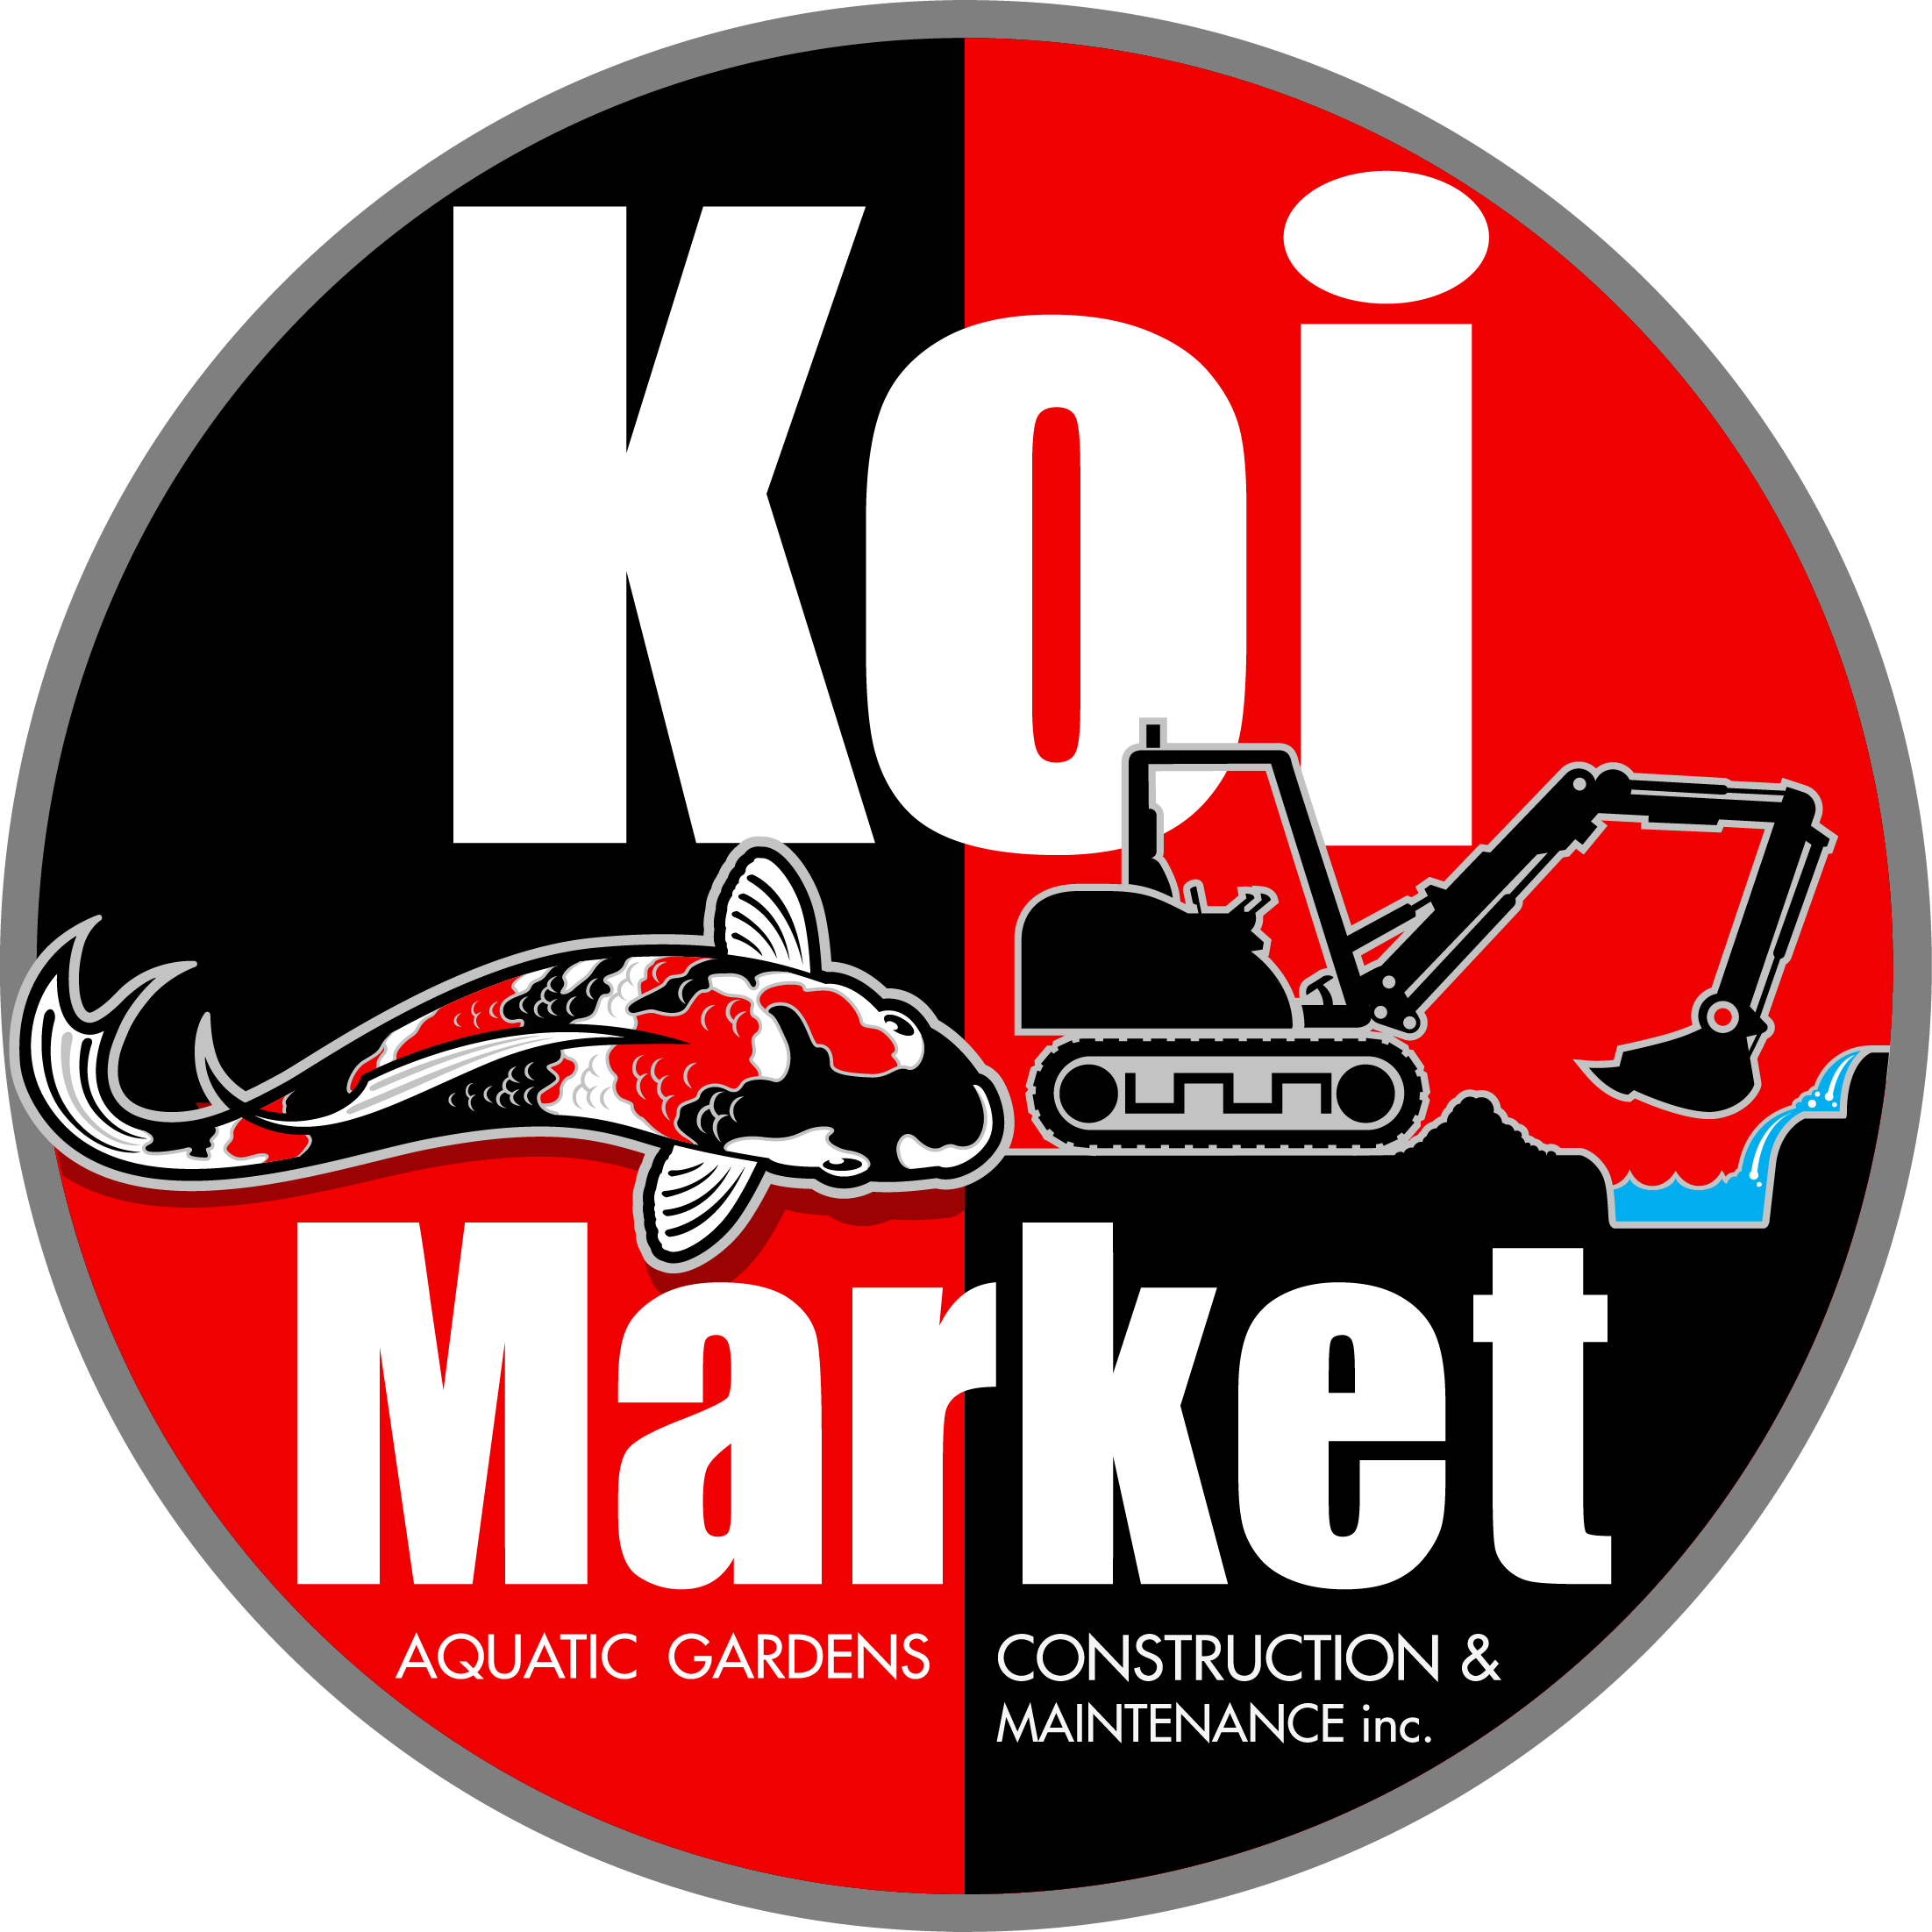 Koi Market Aquatic Gardens Profile